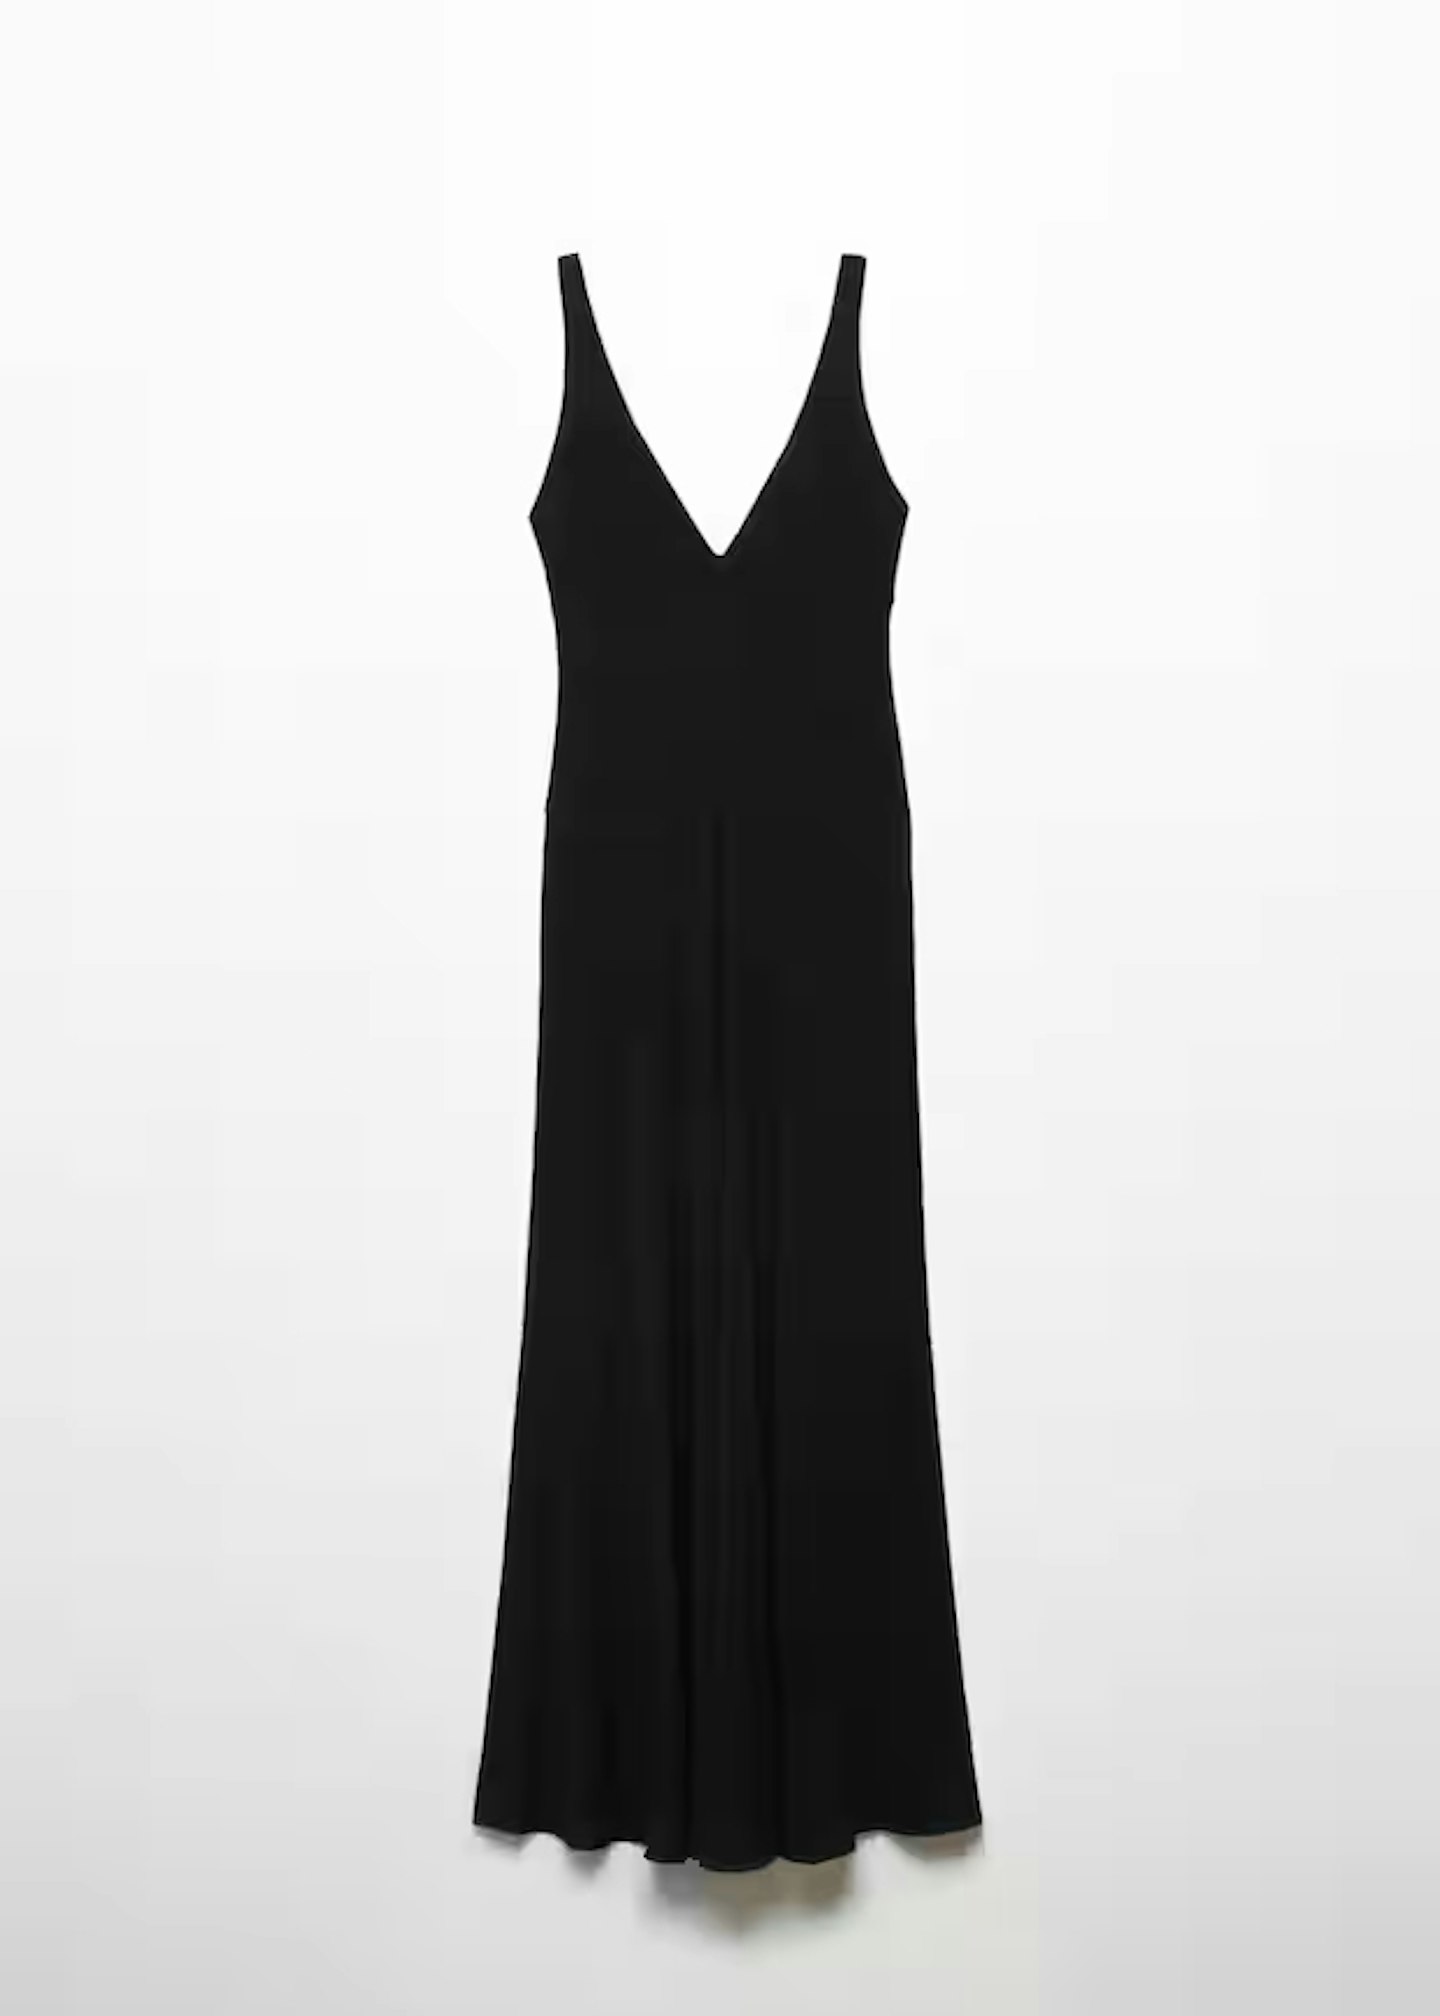 mango victoria beckham long black dress